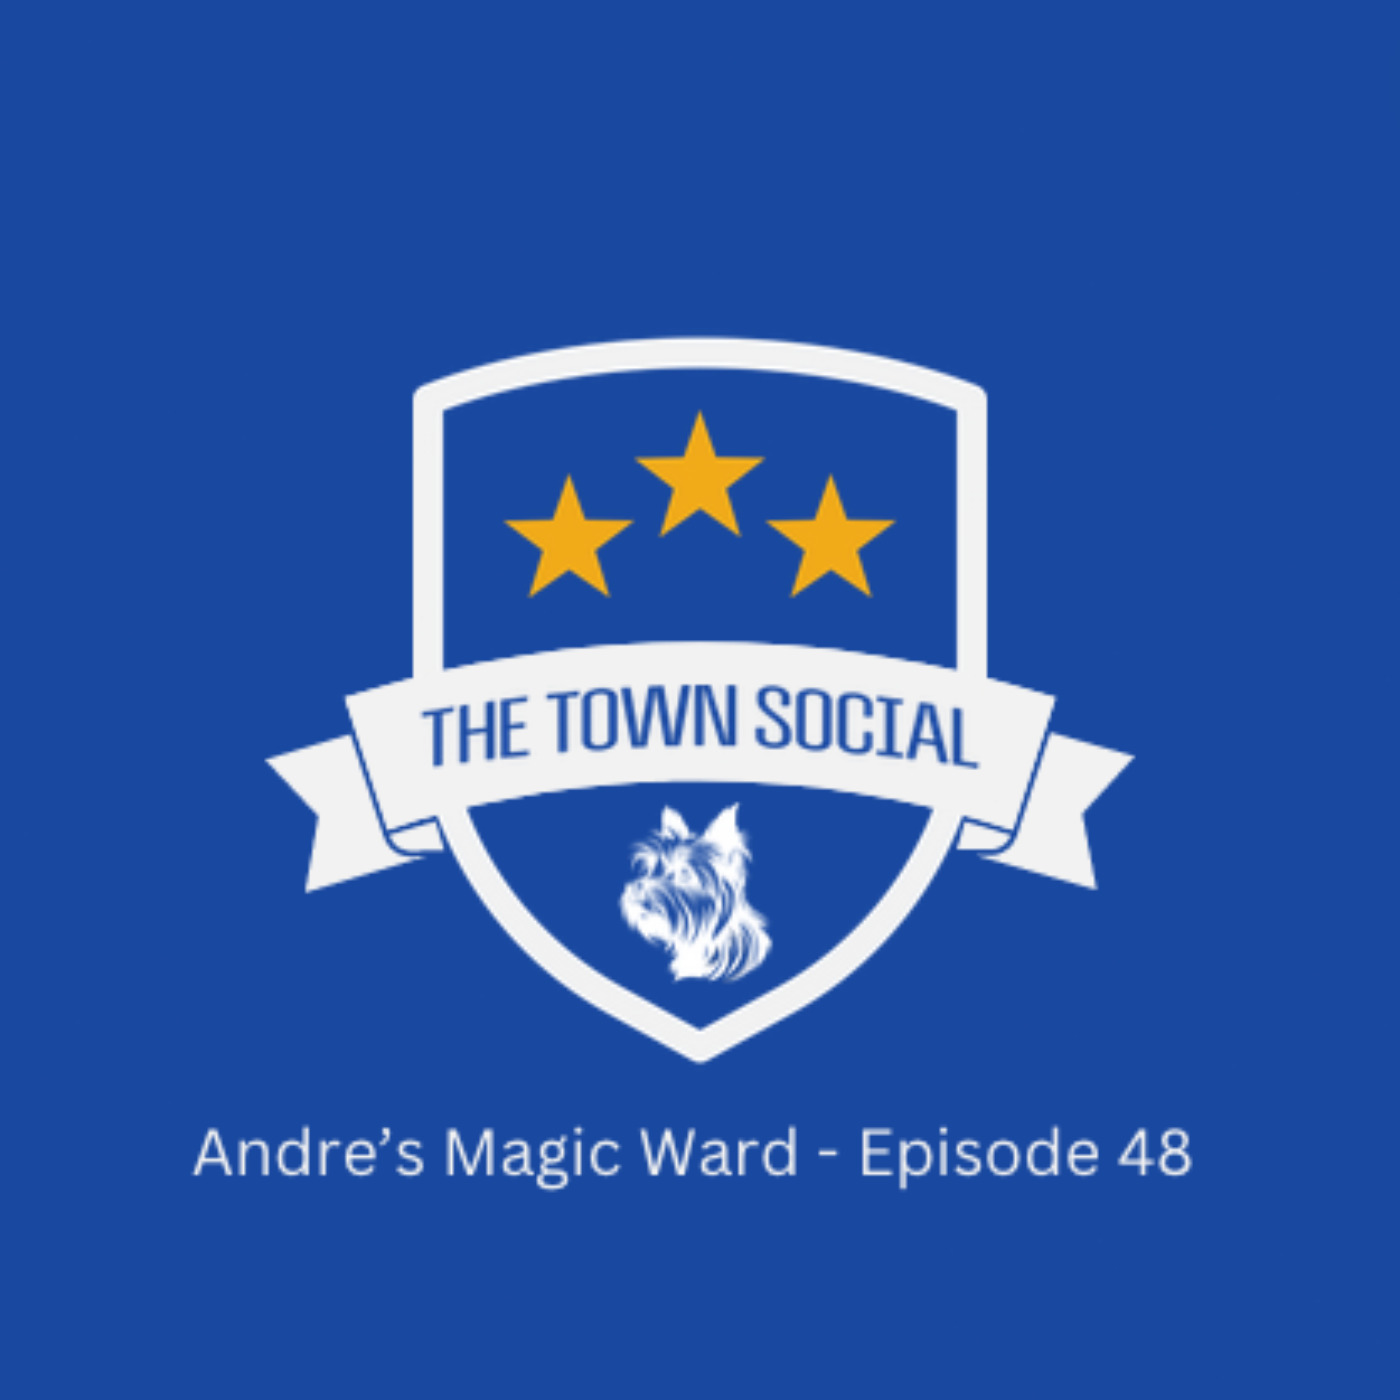 Andre's Magic Ward - Episode 48